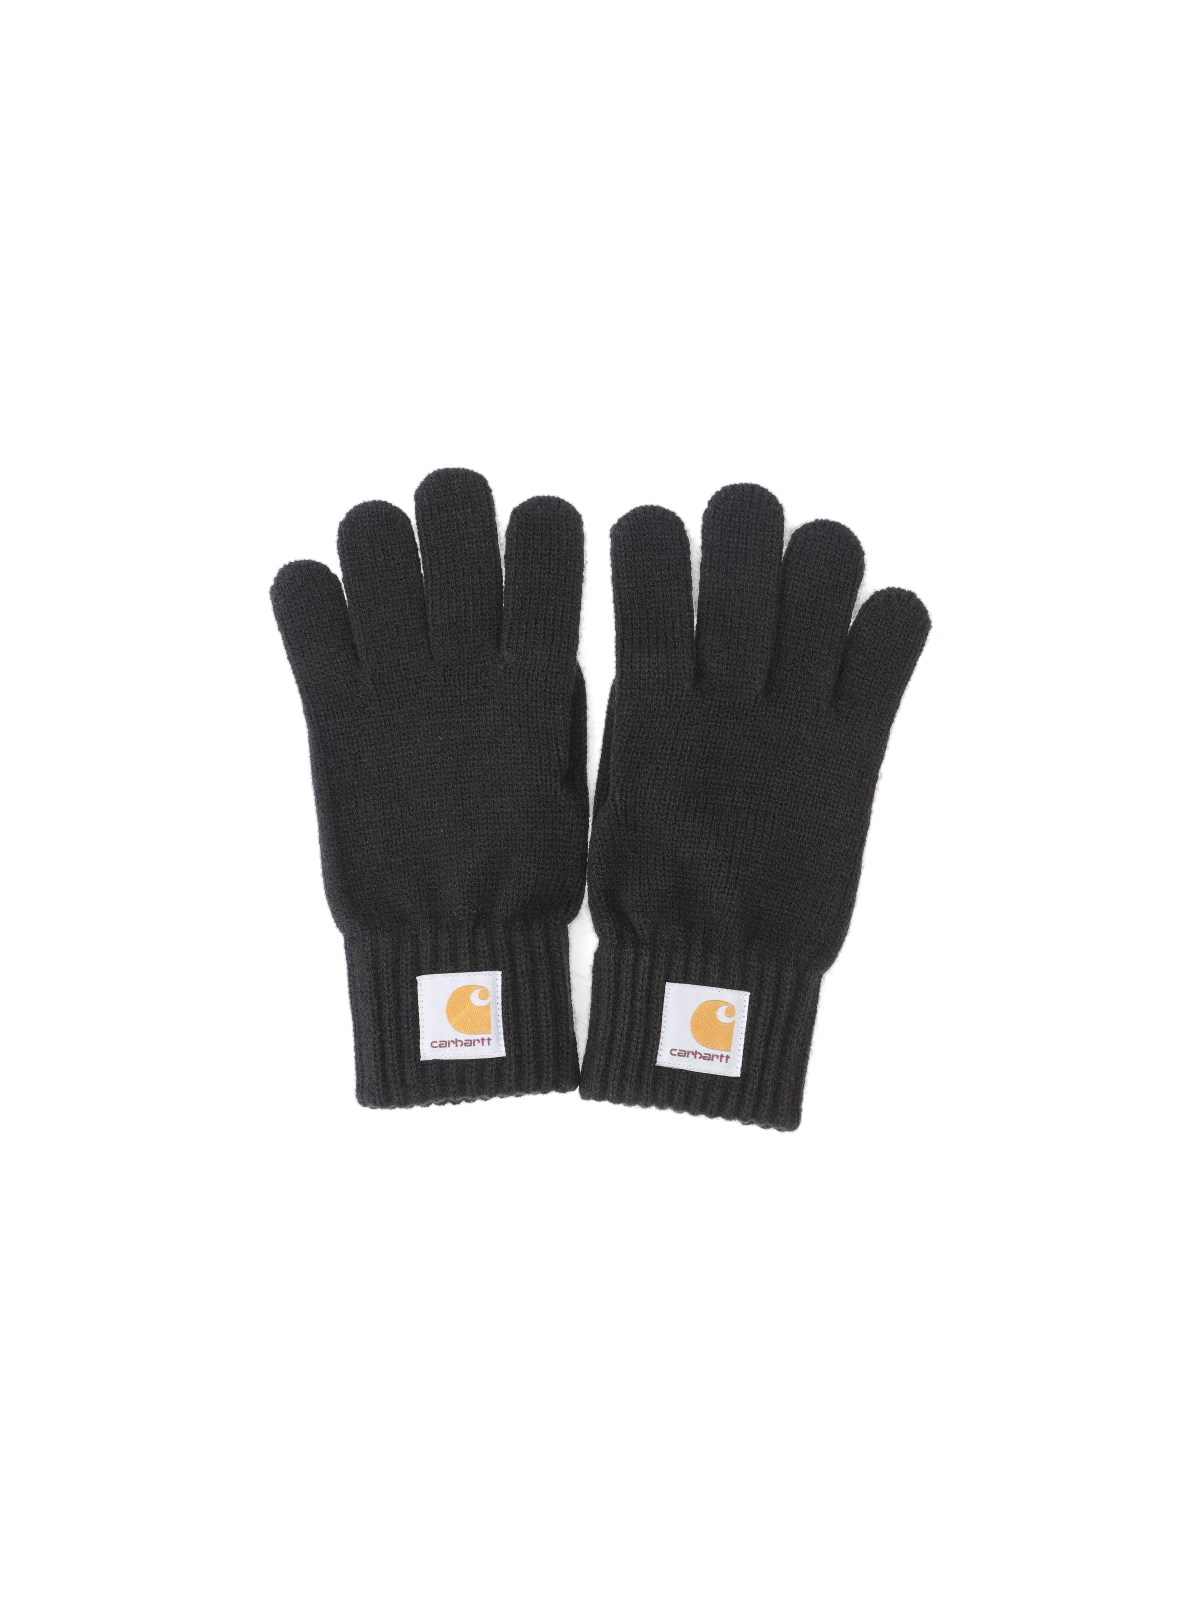 Carhartt Logo Gloves In Black  